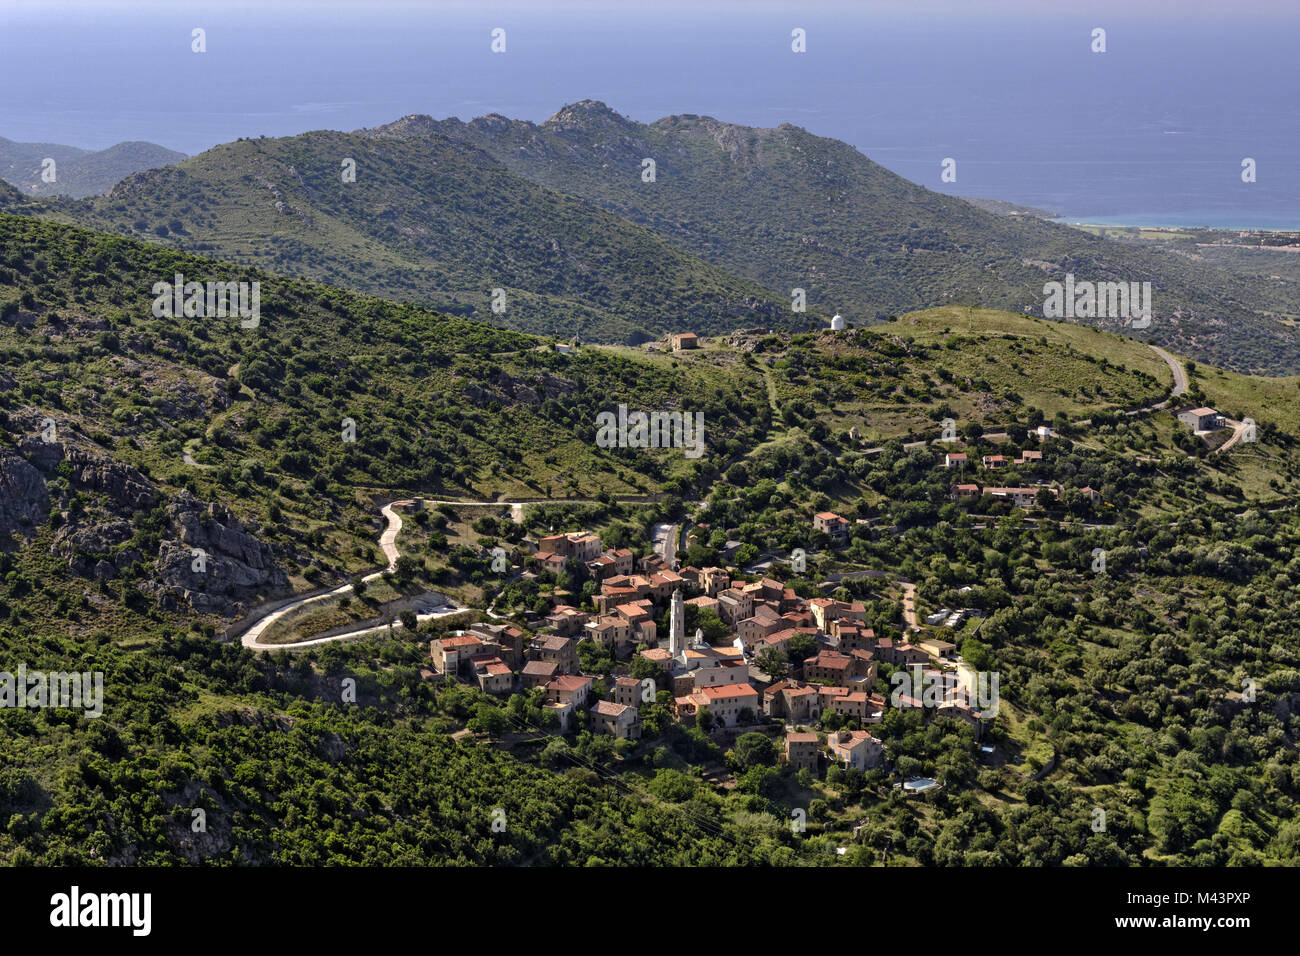 Palasca, mountain village in the Nebbio, Corsica Stock Photo